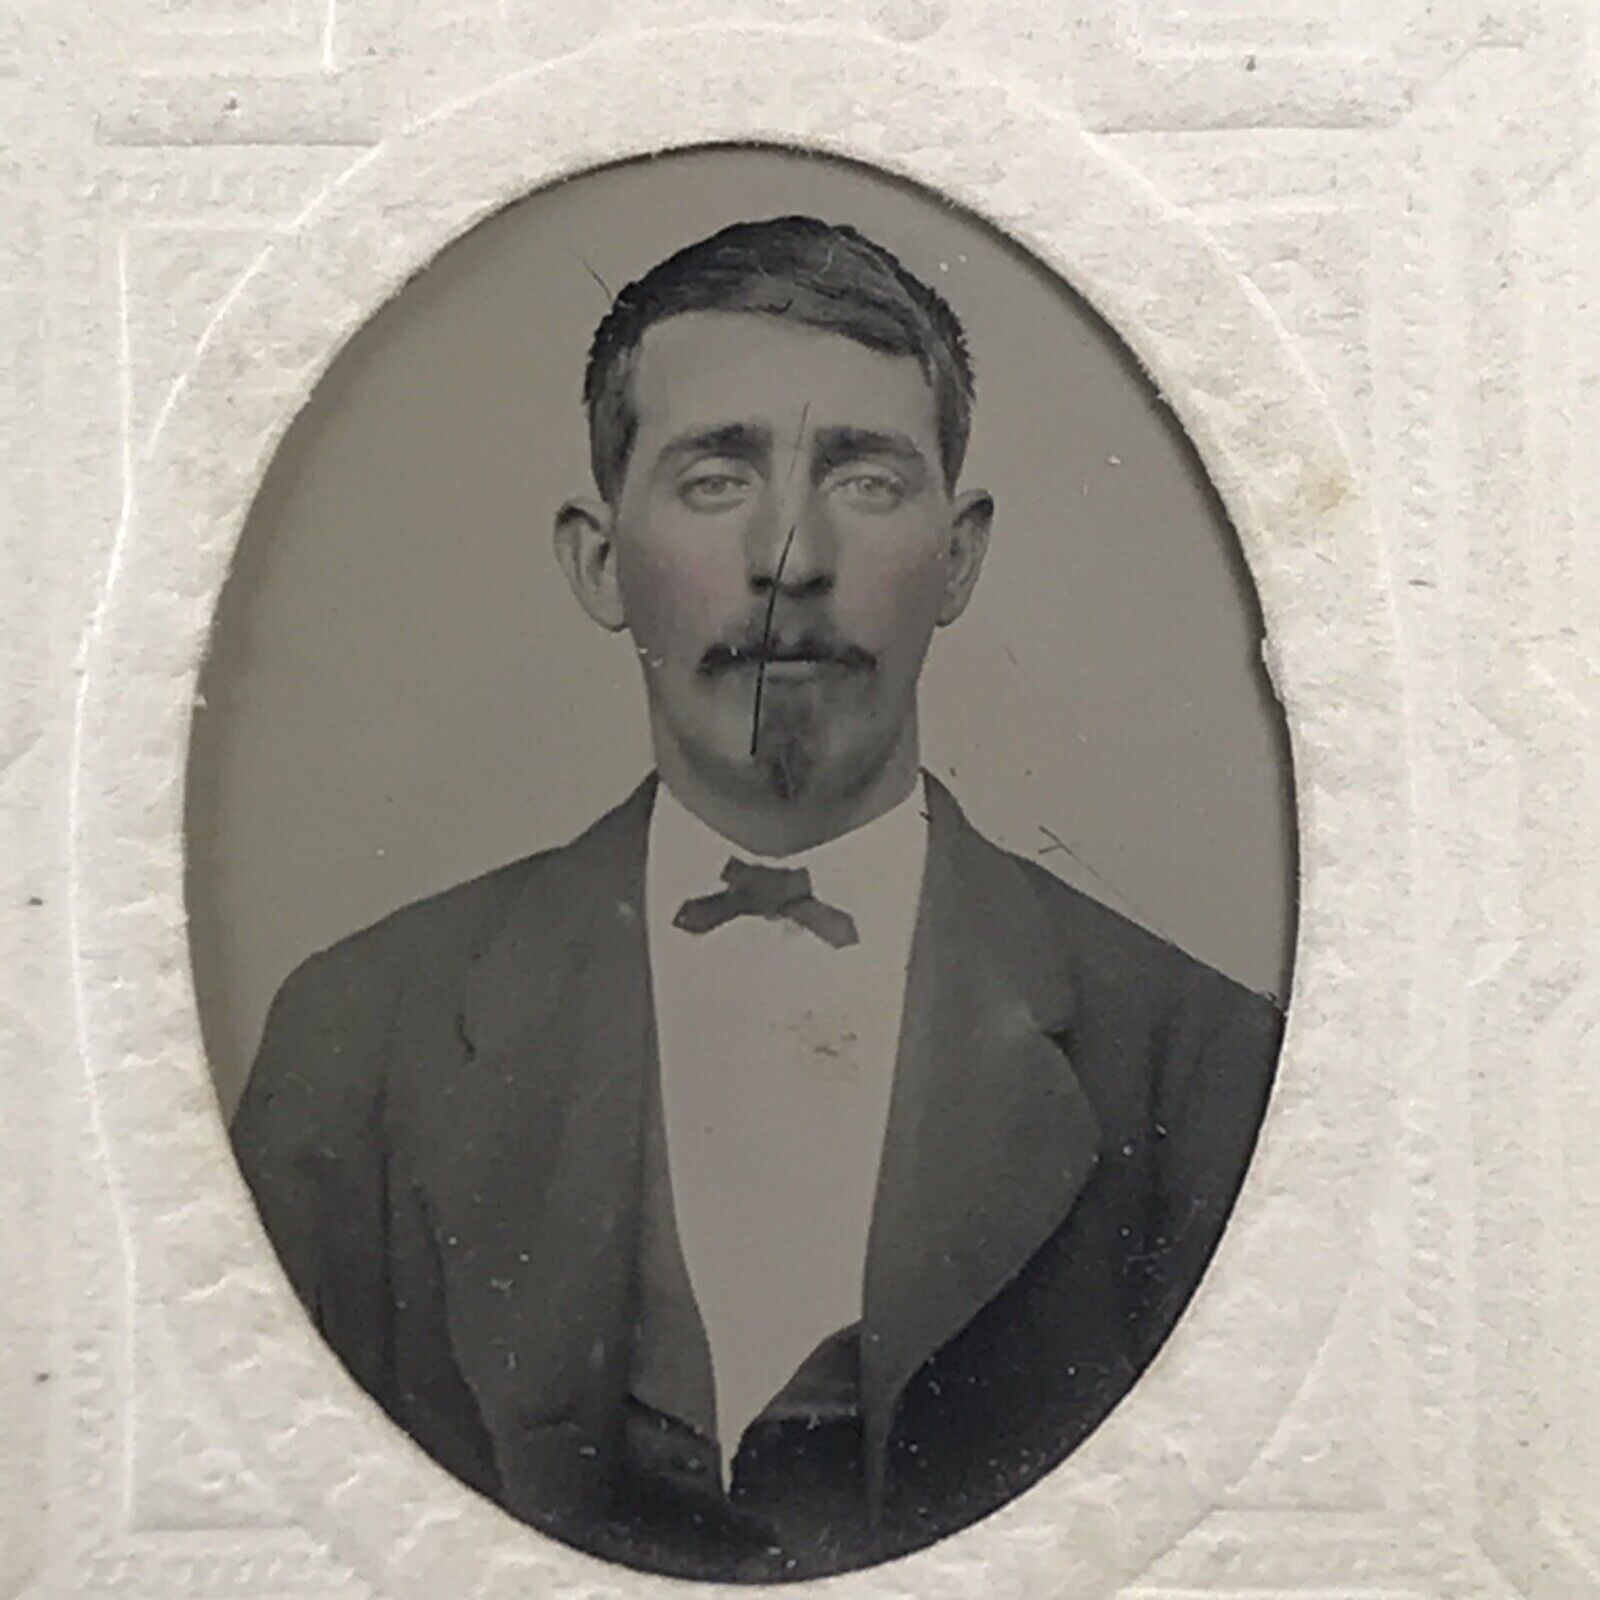 Original Antique Tintype ~ Stern Young Man with Facial Hair ~ Civil War Period